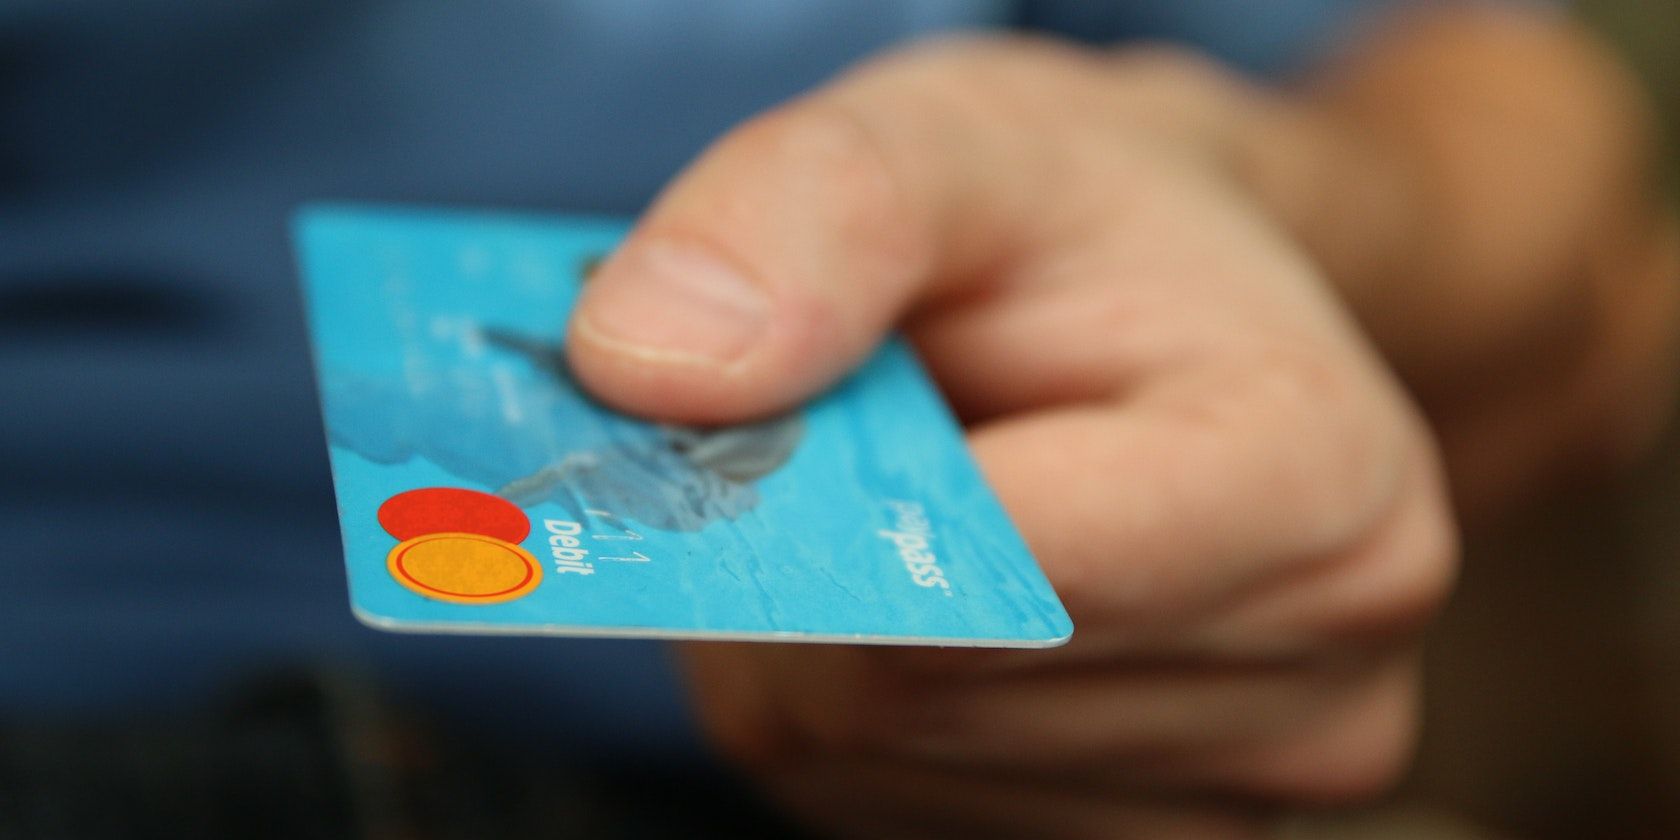 Person holding debit card